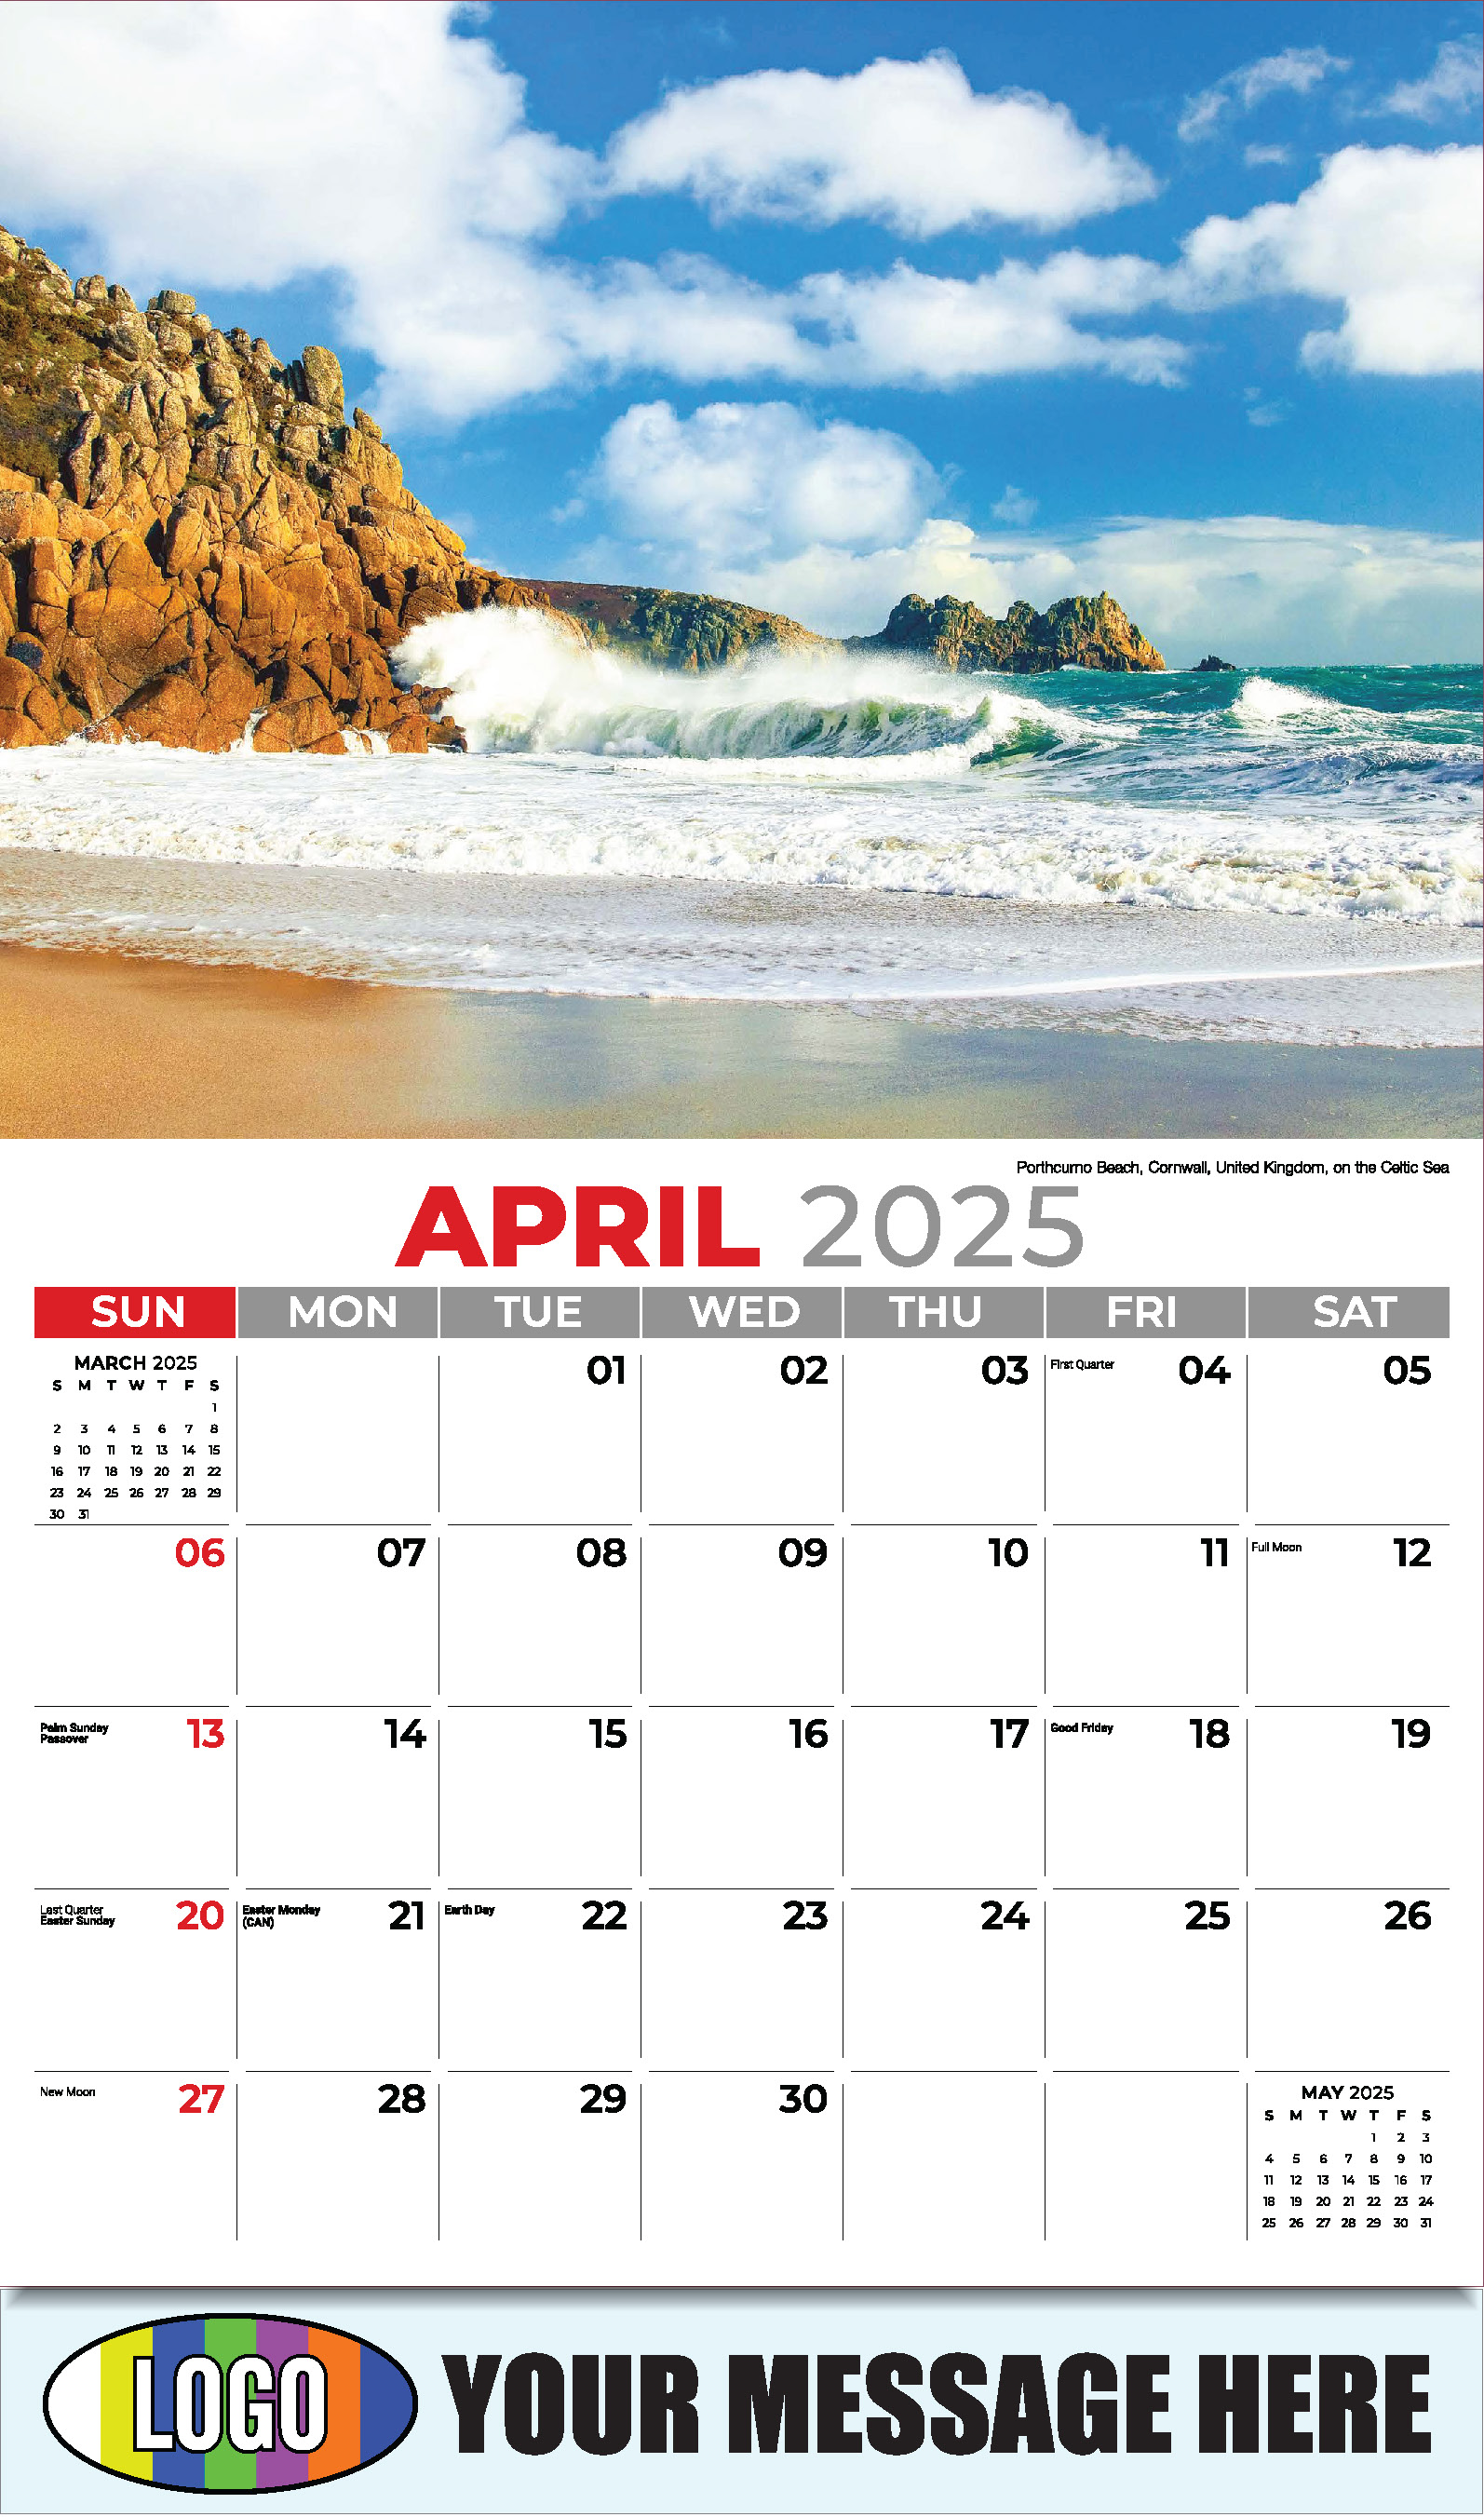 Sun, Sand and Surf 2025 Business Advertsing Wall Calendar - April